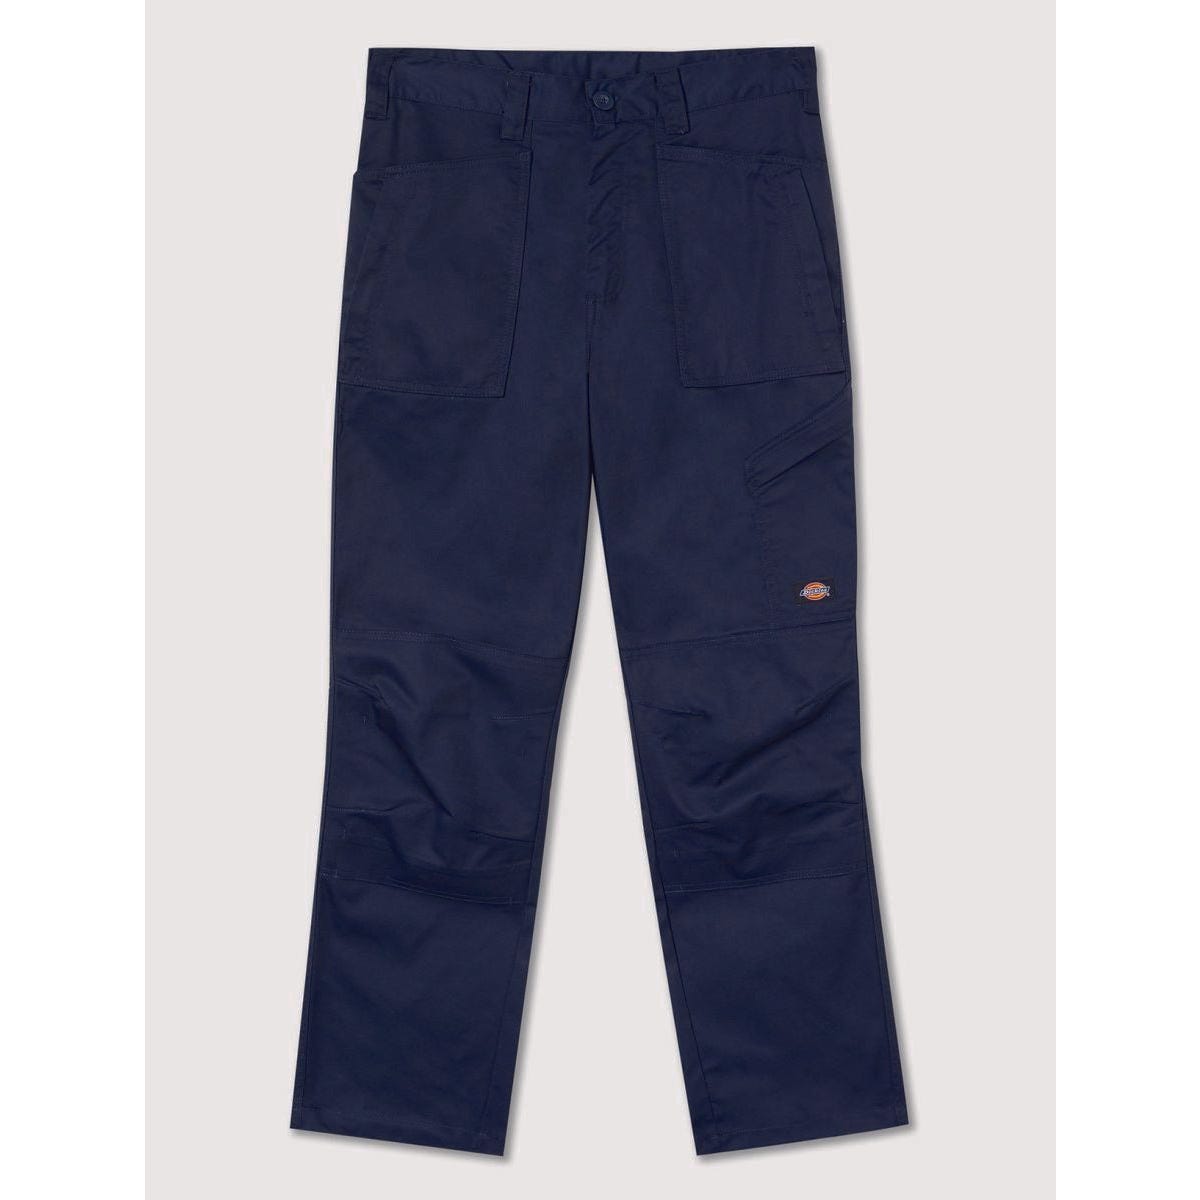 Pantalon de travail Action Flex bleu marine - Dickies - Taille 36 5